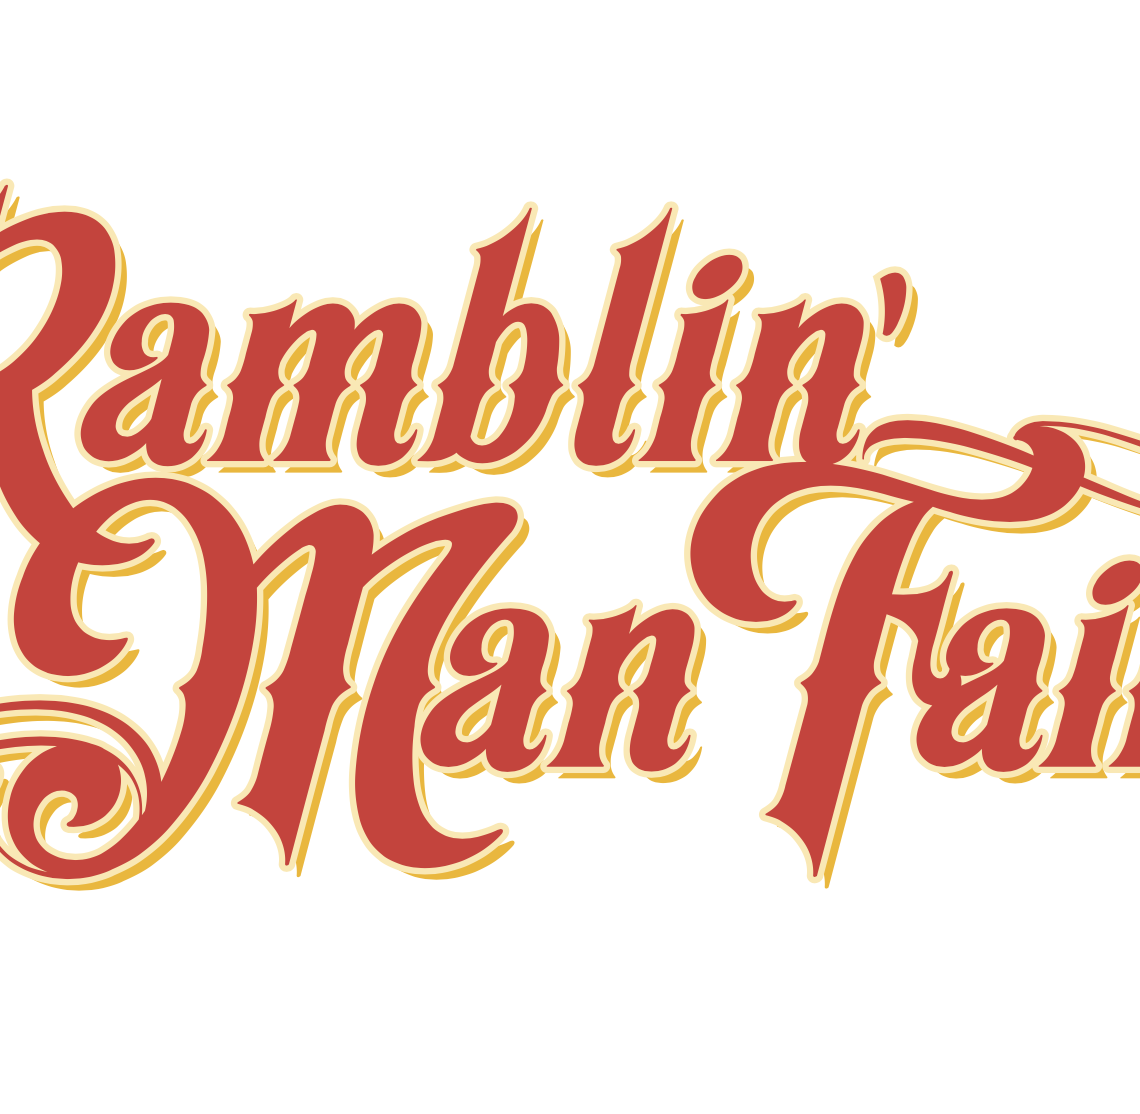 Ramblin’ Man Fair. Mote Park, Maidstone. Friday 19 July 2019.